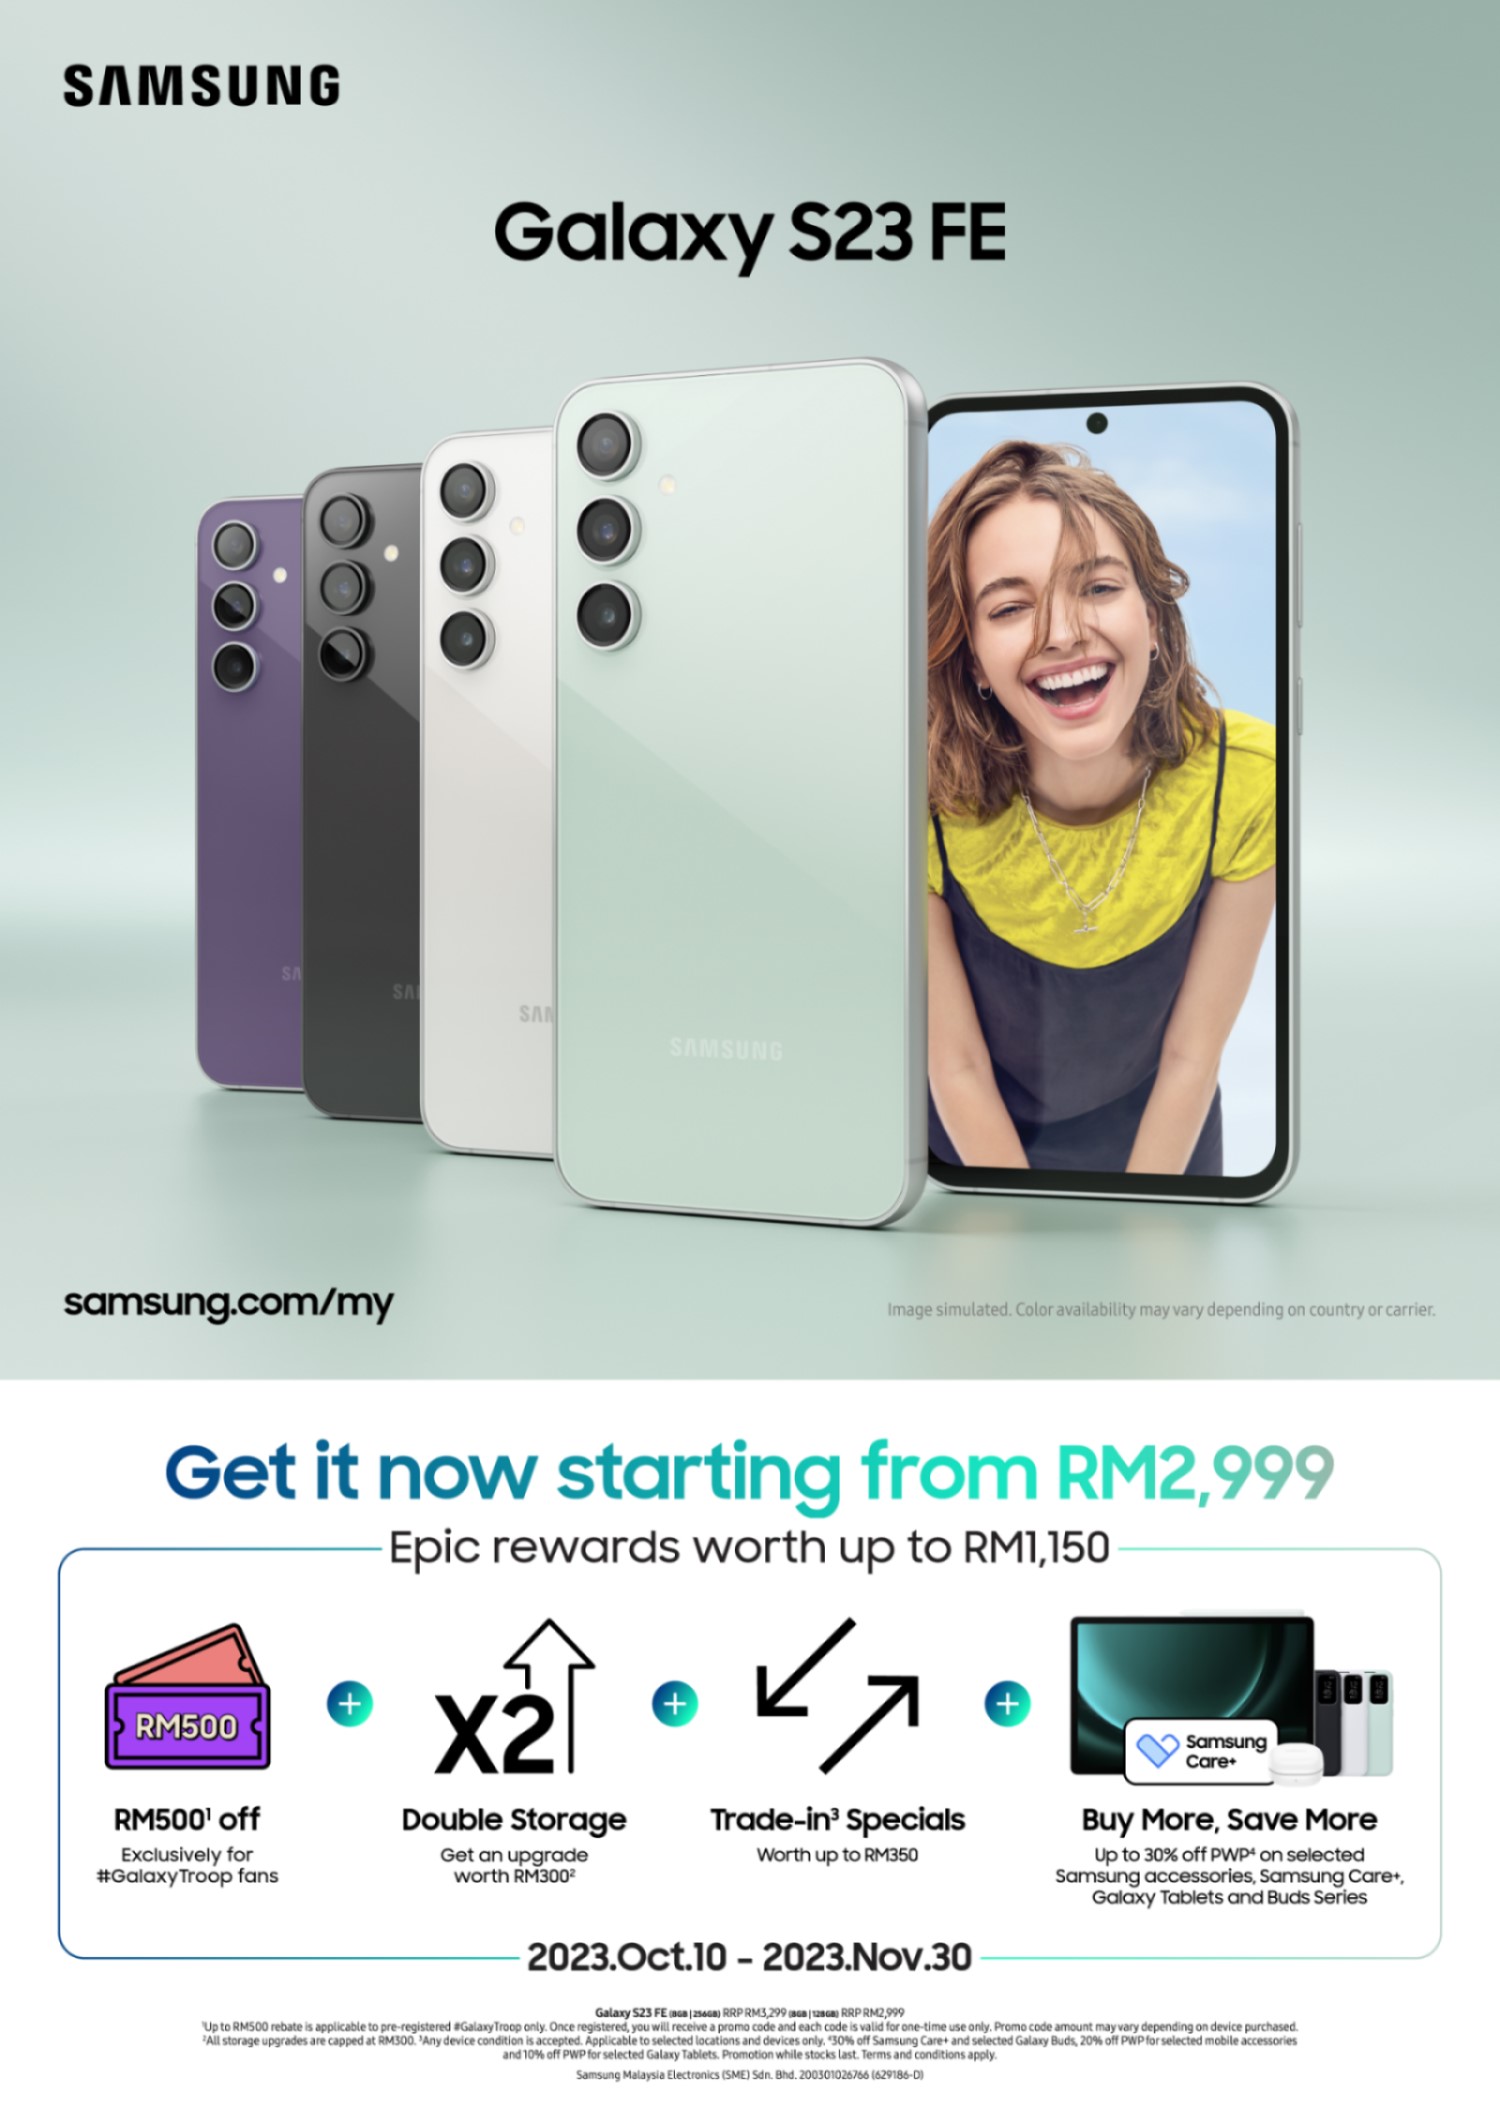 Samsung Galaxy S23 FE Launch Promo